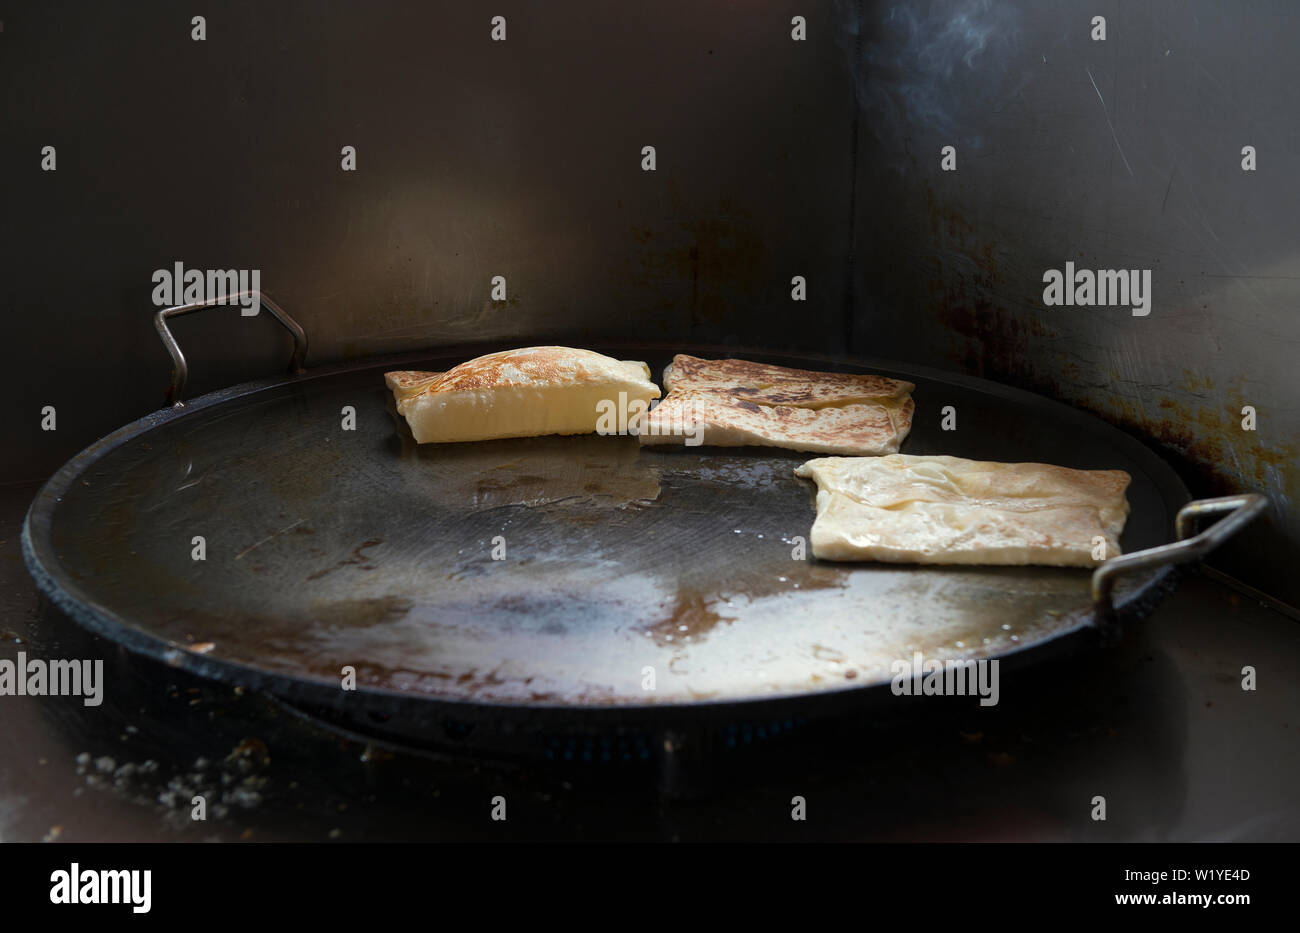 kuching, sarawak/malaysia - january 31, 2017: preparation of   roti canai in a pan outside a restaurant Stock Photo